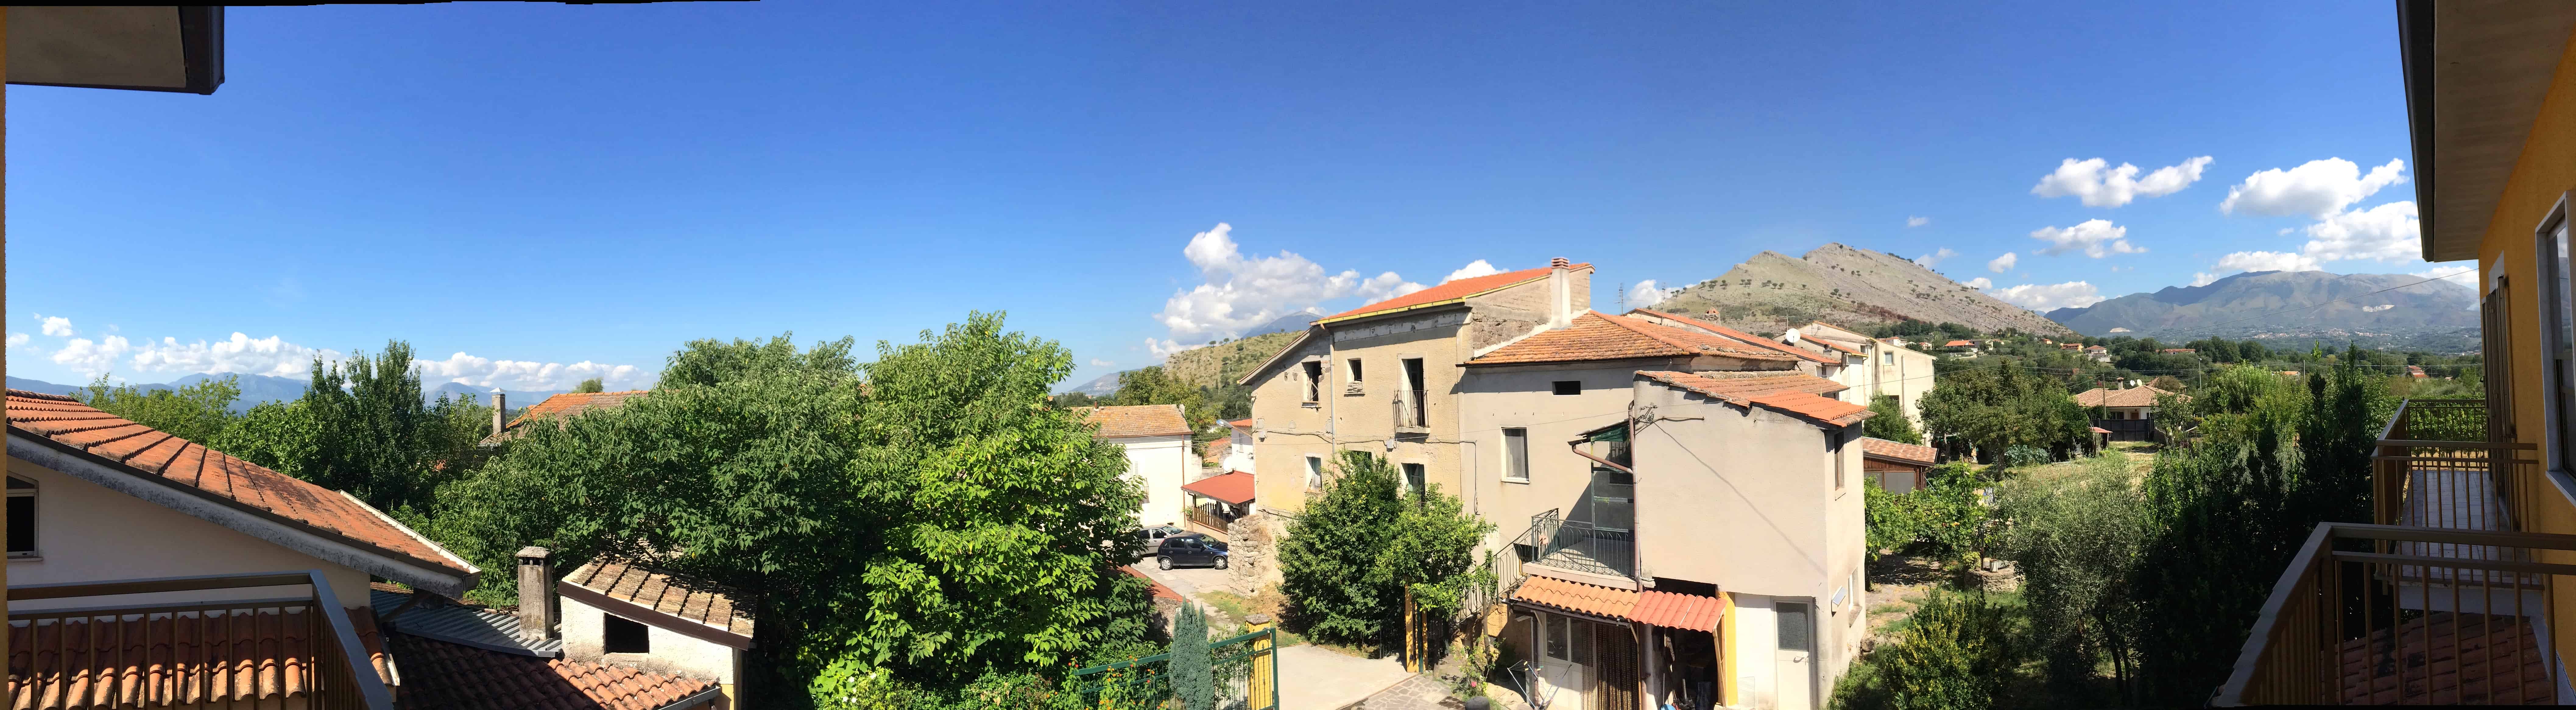 panorama of Nalli